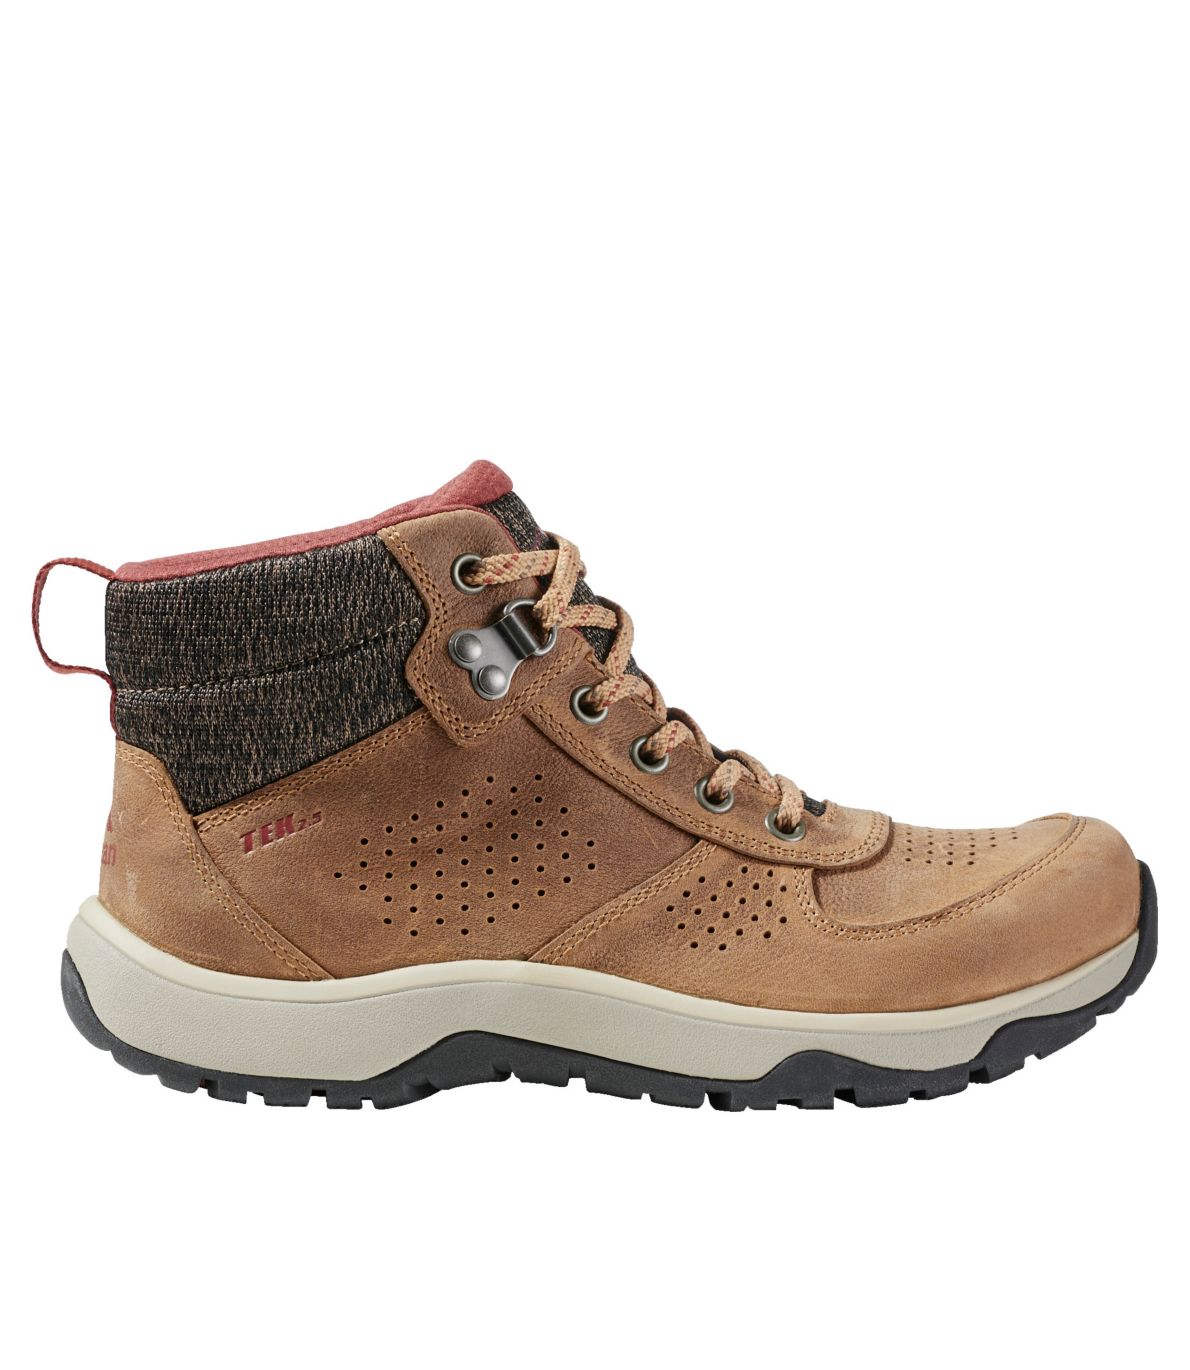 Women's Trailduster Hiking Boots